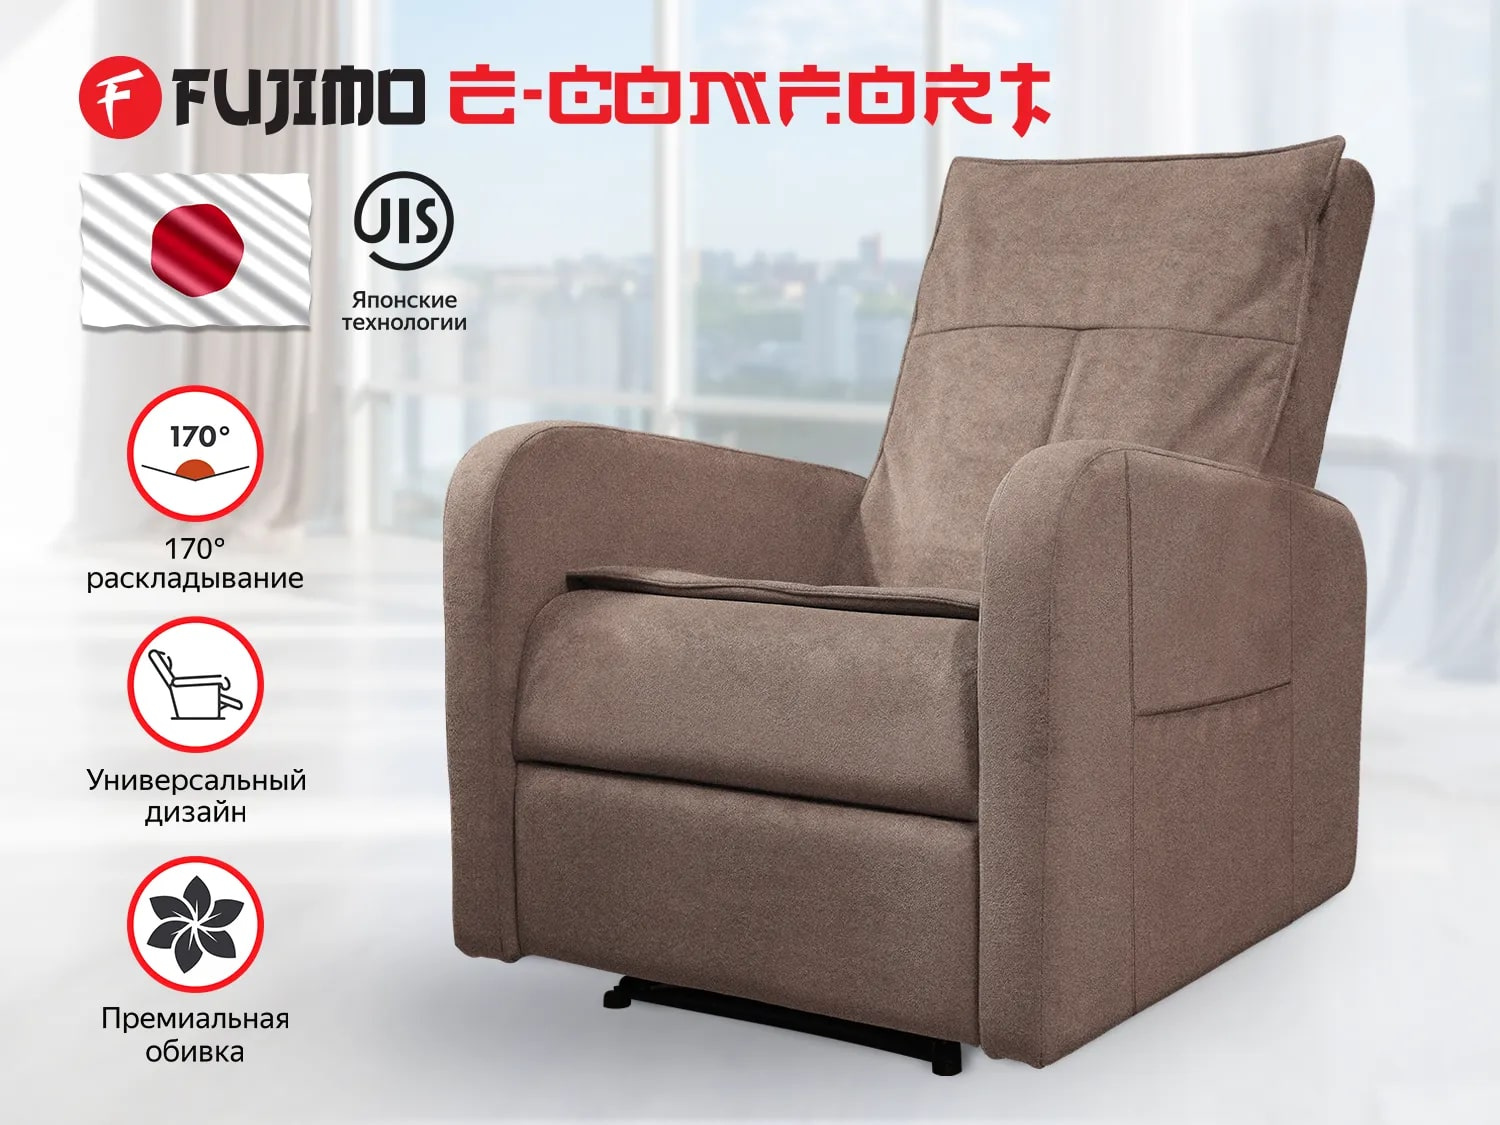 E-COMFORT CHAIR F3005 FEW с электроприводом Терра в Омске по цене 63000 ₽ в категории массажные кресла Fujimo